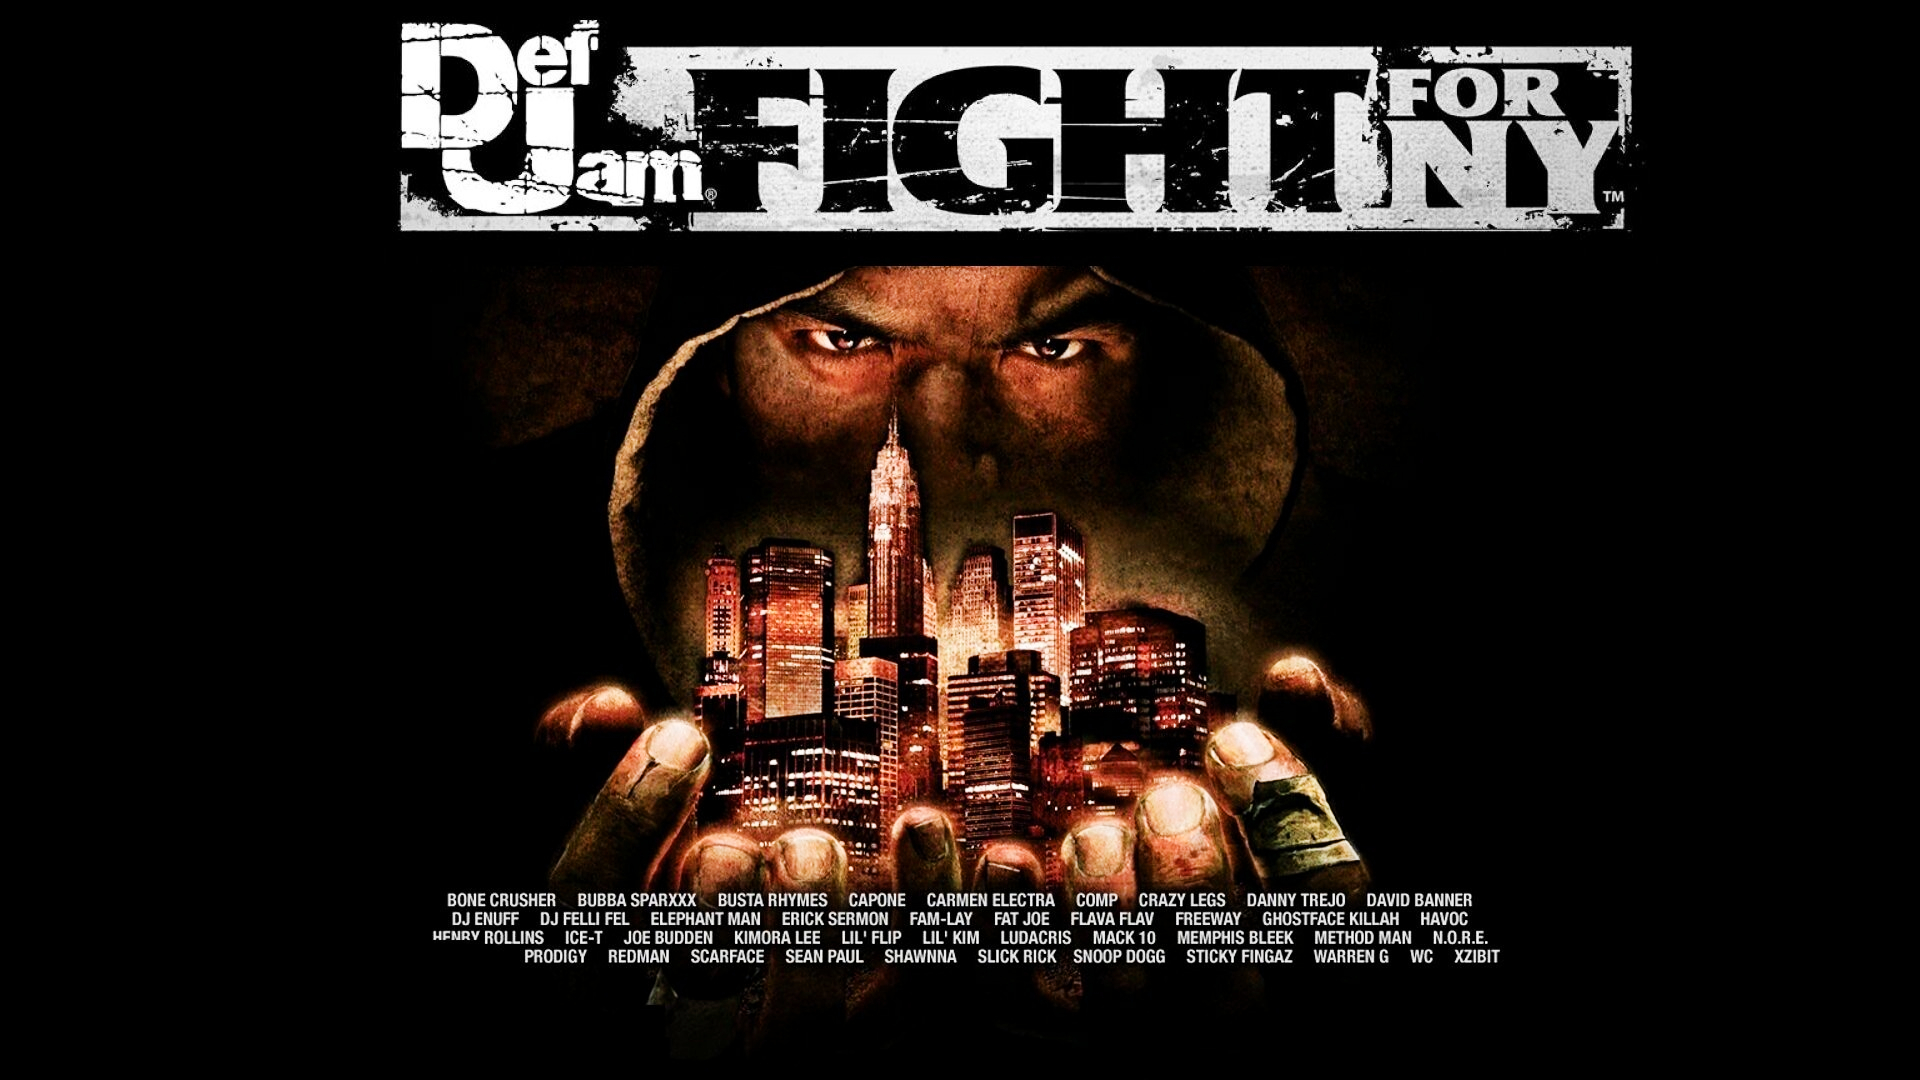 Def Jam PlayStation 5 sequel campaign gets over 10k signatures